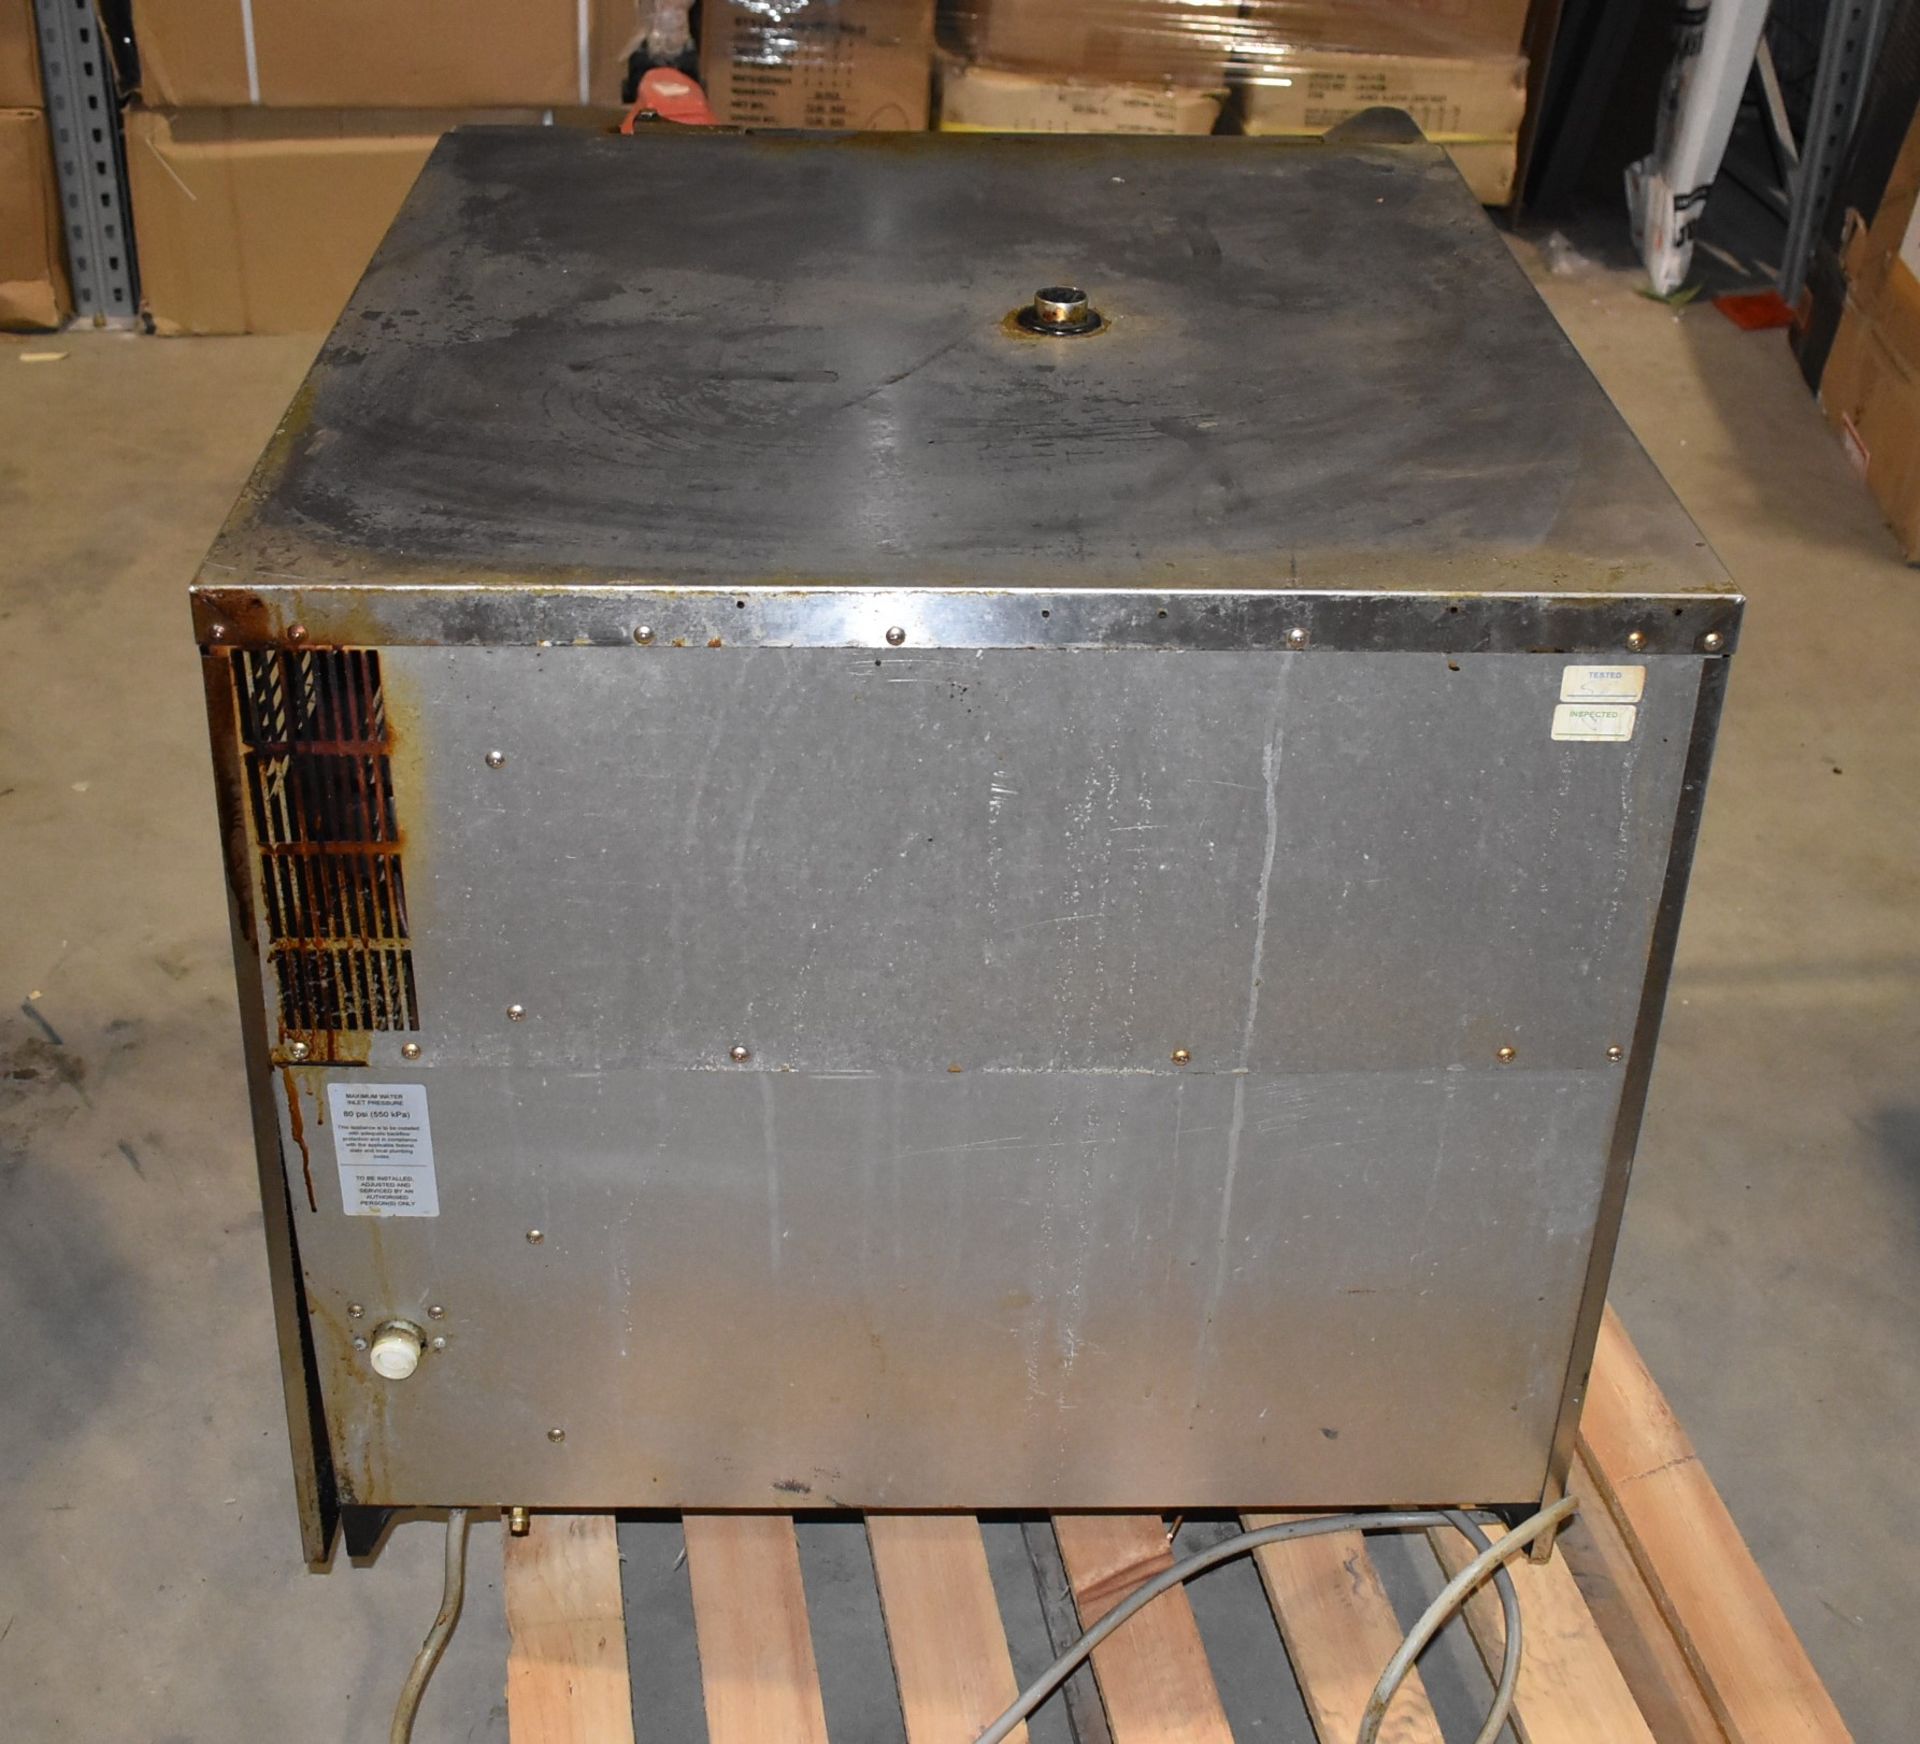 1 x Turbo Fan E31 Electric Convection Oven - Model E32D4 - 240V - Image 5 of 7